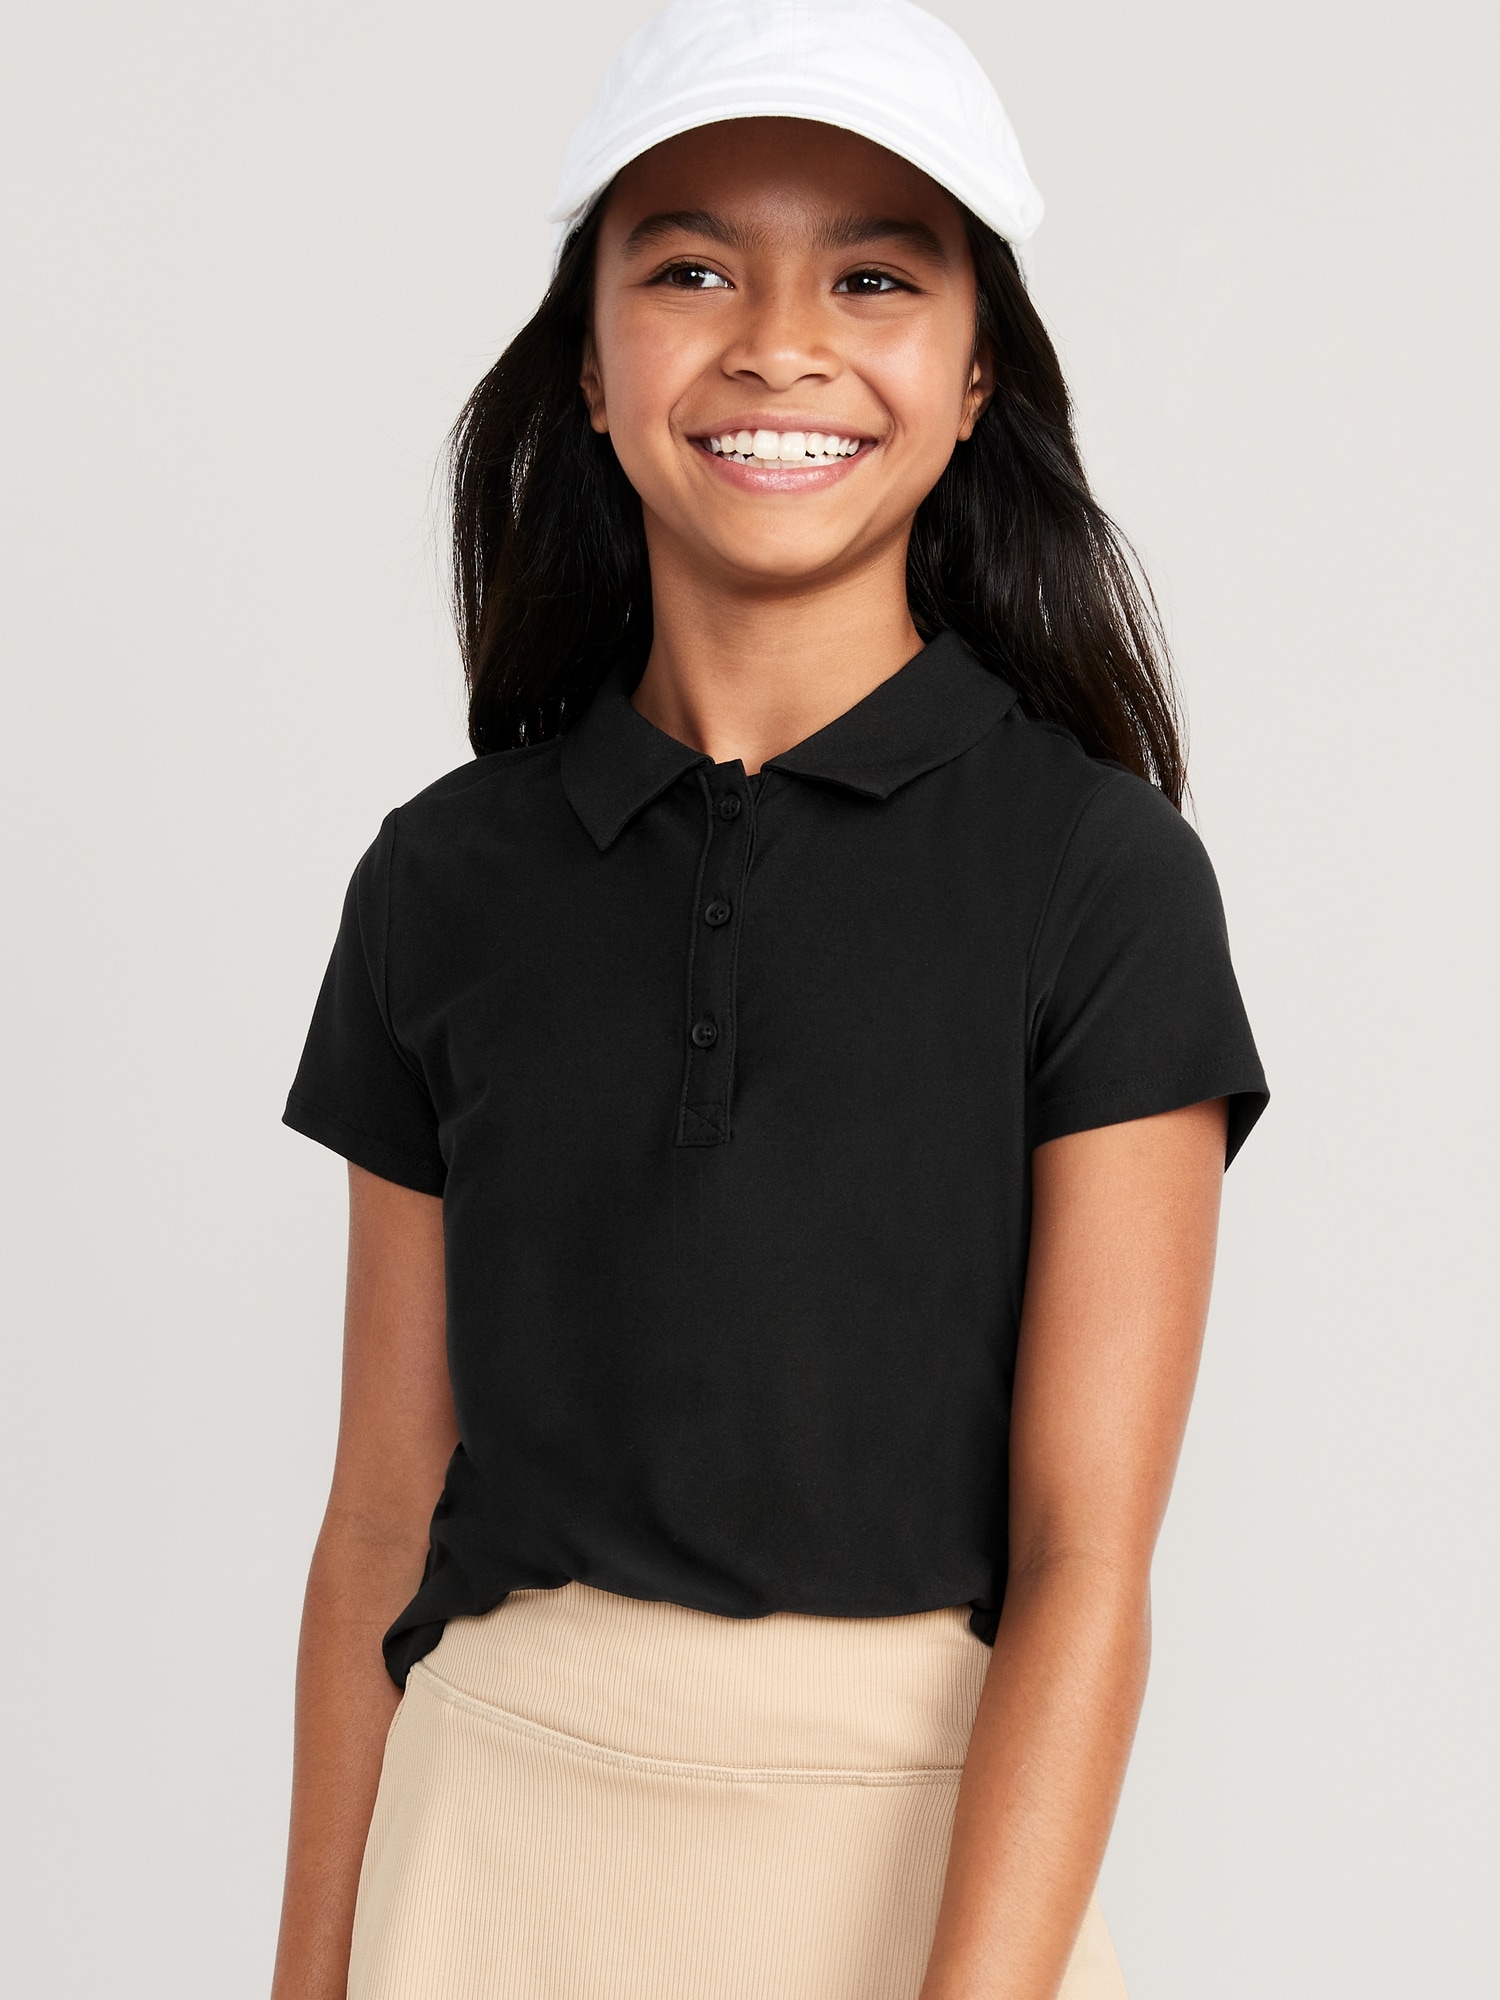 Old Navy Cloud 94 Soft School Uniform Polo Shirt for Girls black. 1